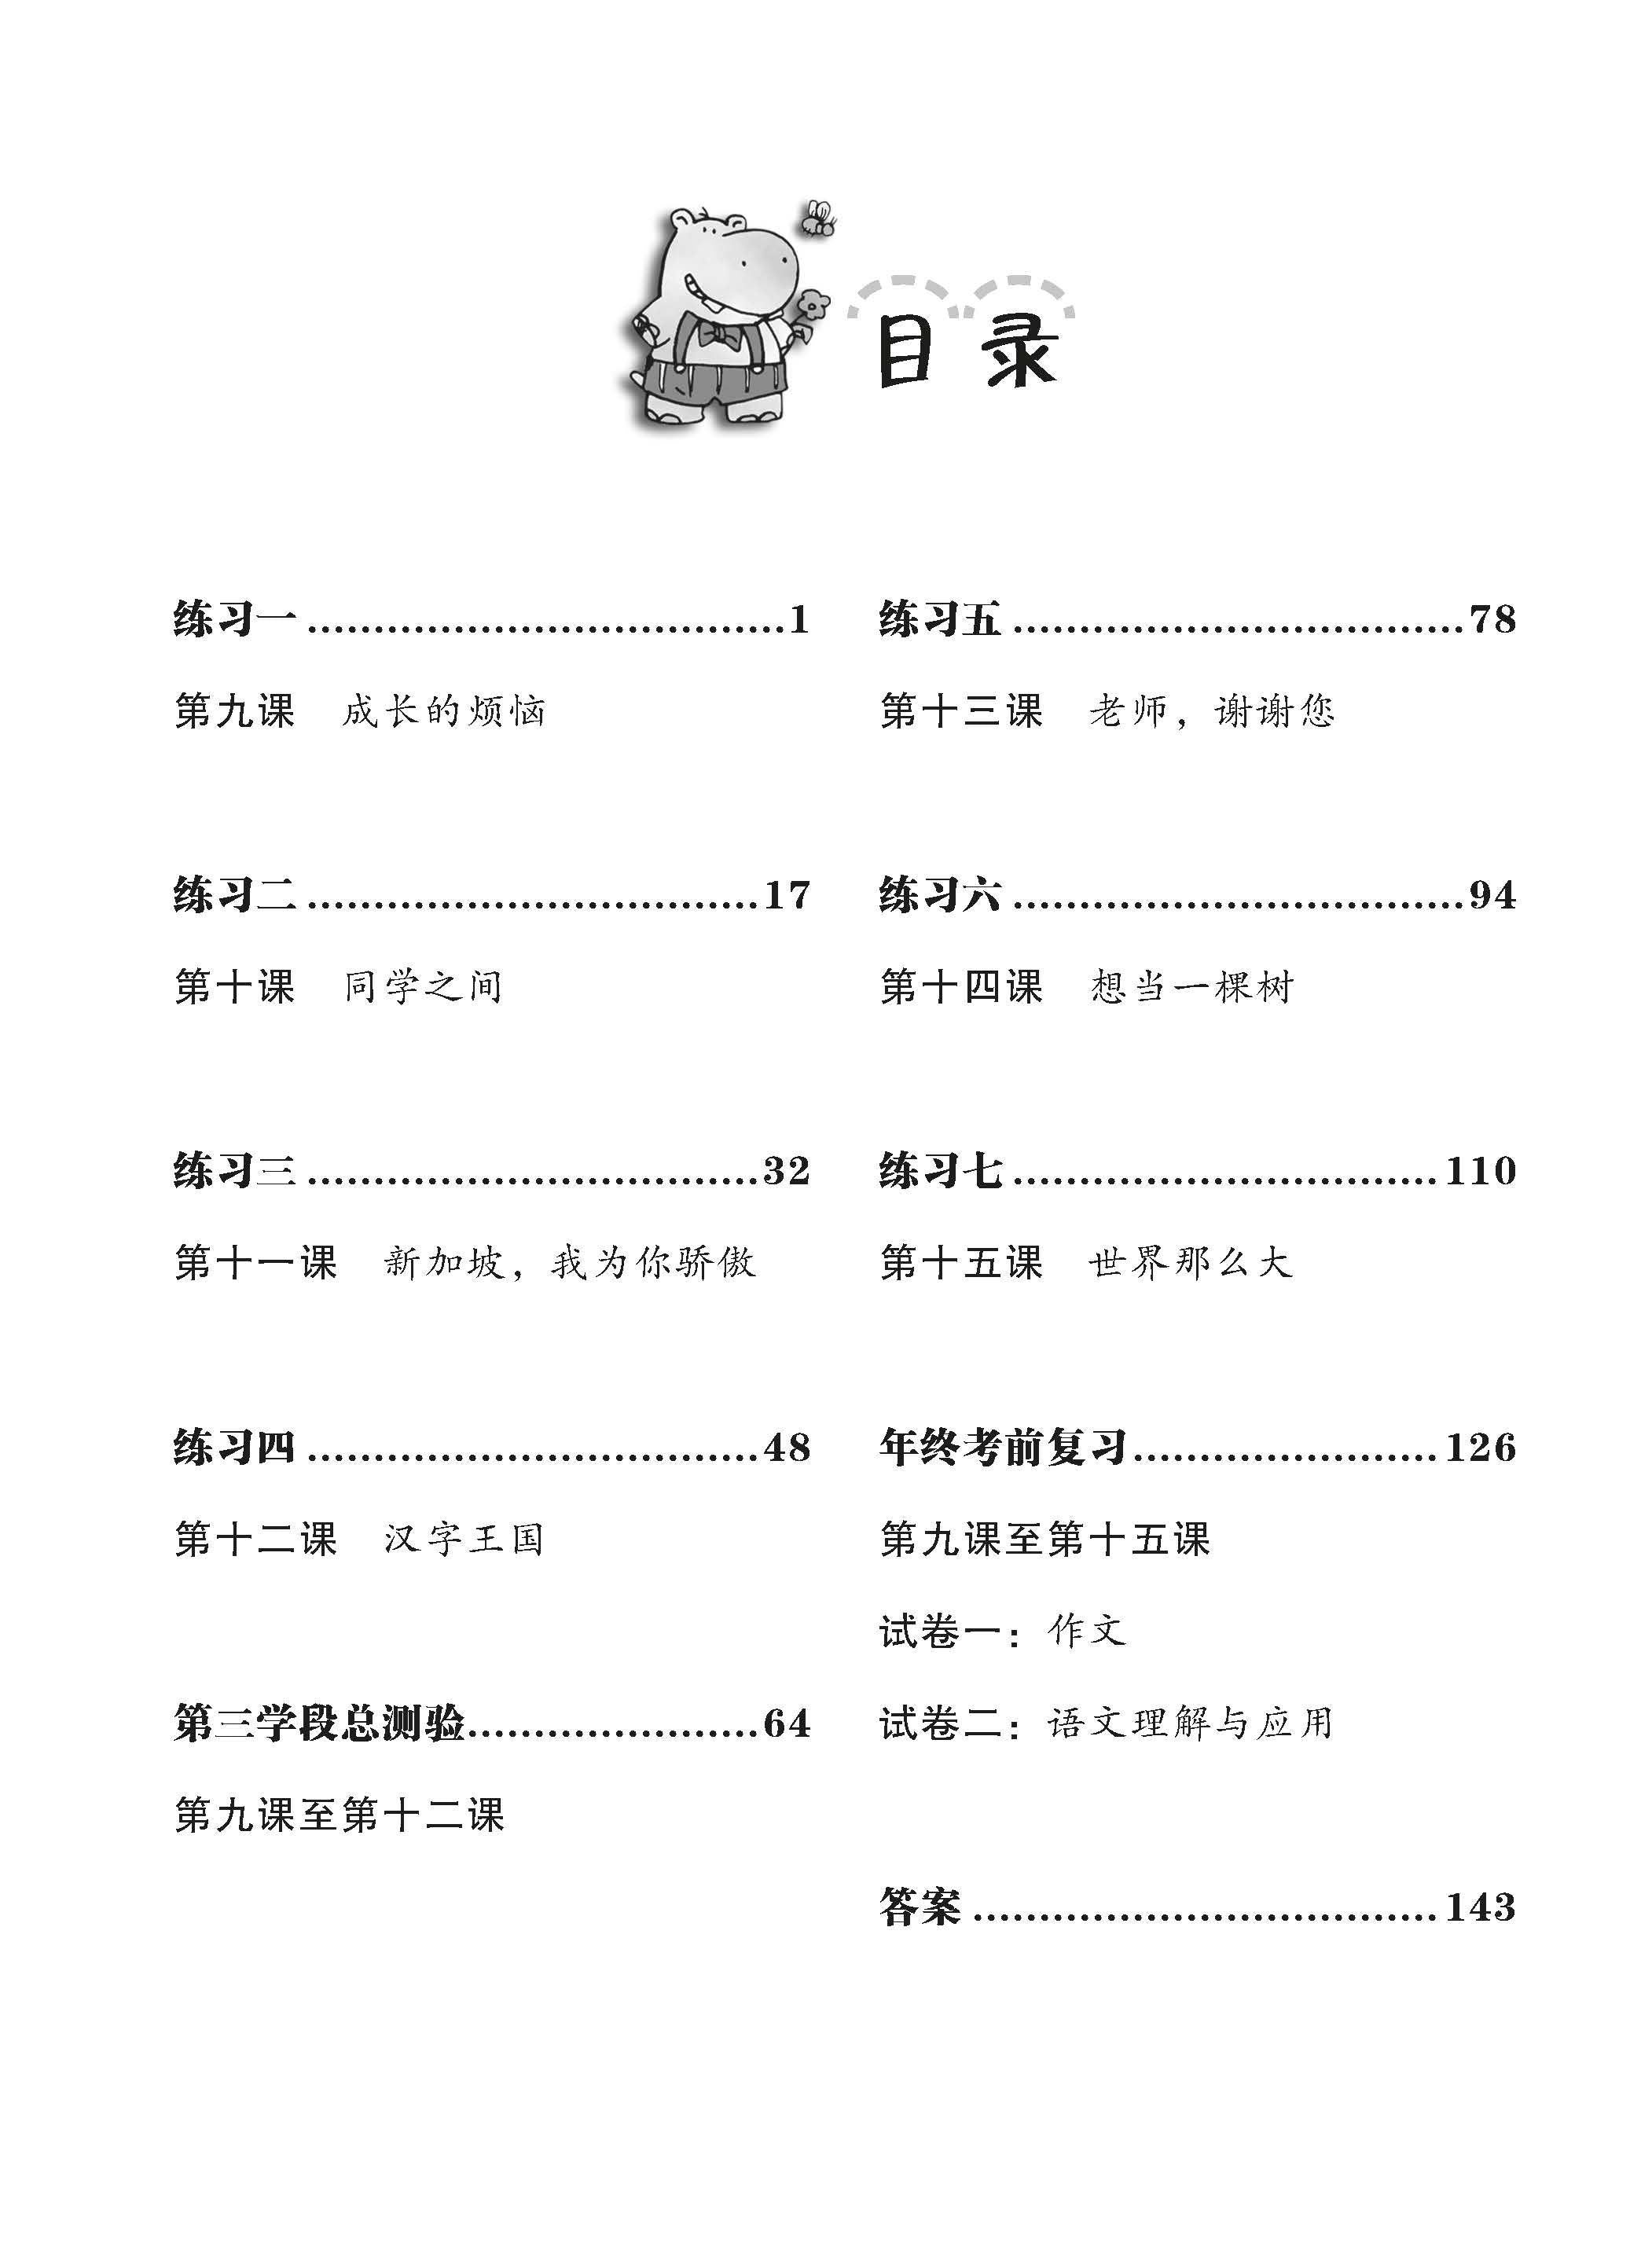 Primary 5B Chinese Weekly Revision 每周华文课文复习 - _MS, BASIC, CHINESE, EDUCATIONAL PUBLISHING HOUSE, PRIMARY 5